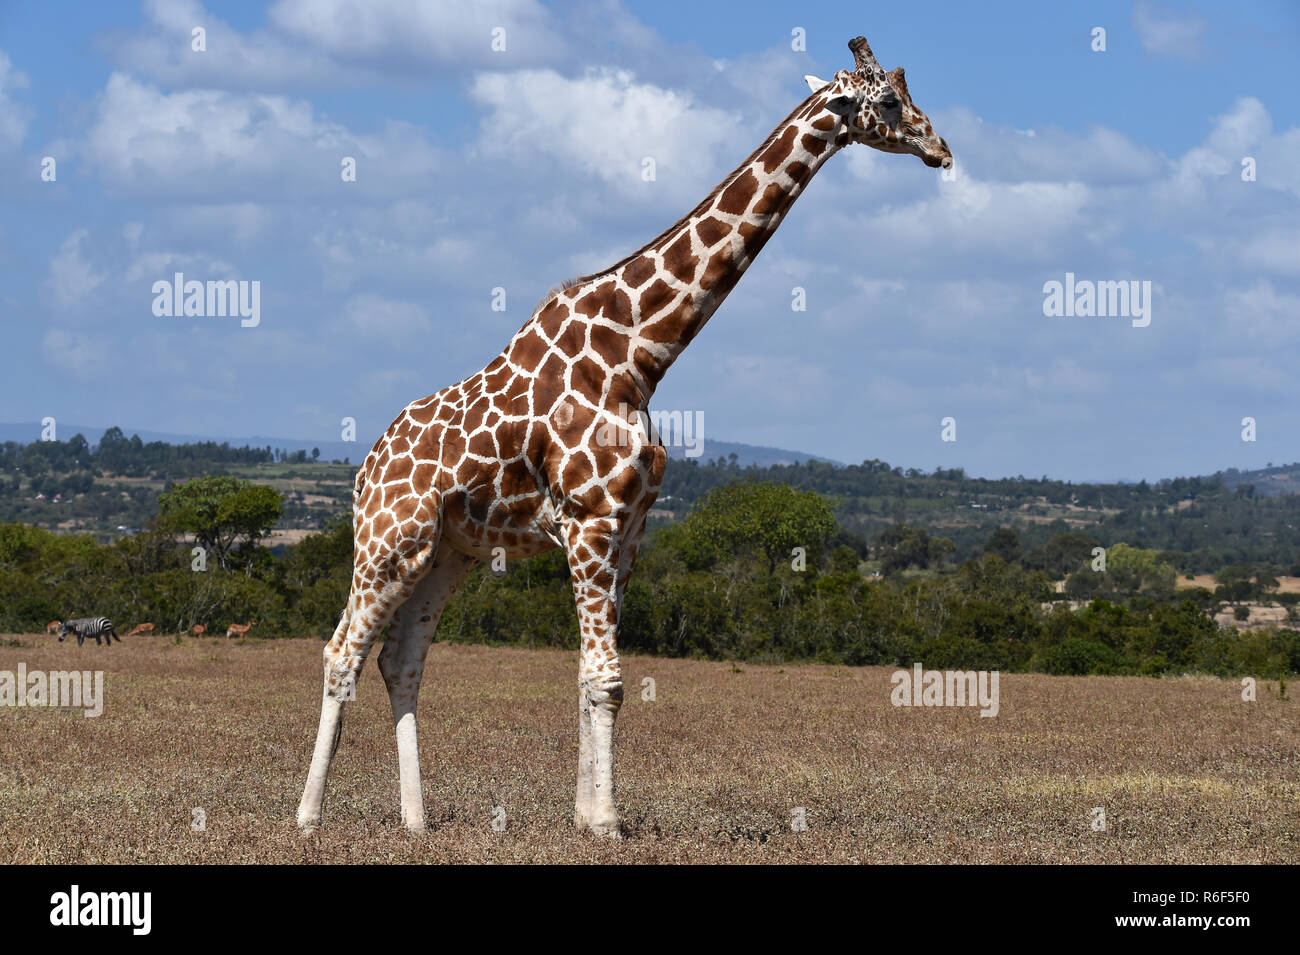 giraffe in kenya Stock Photo